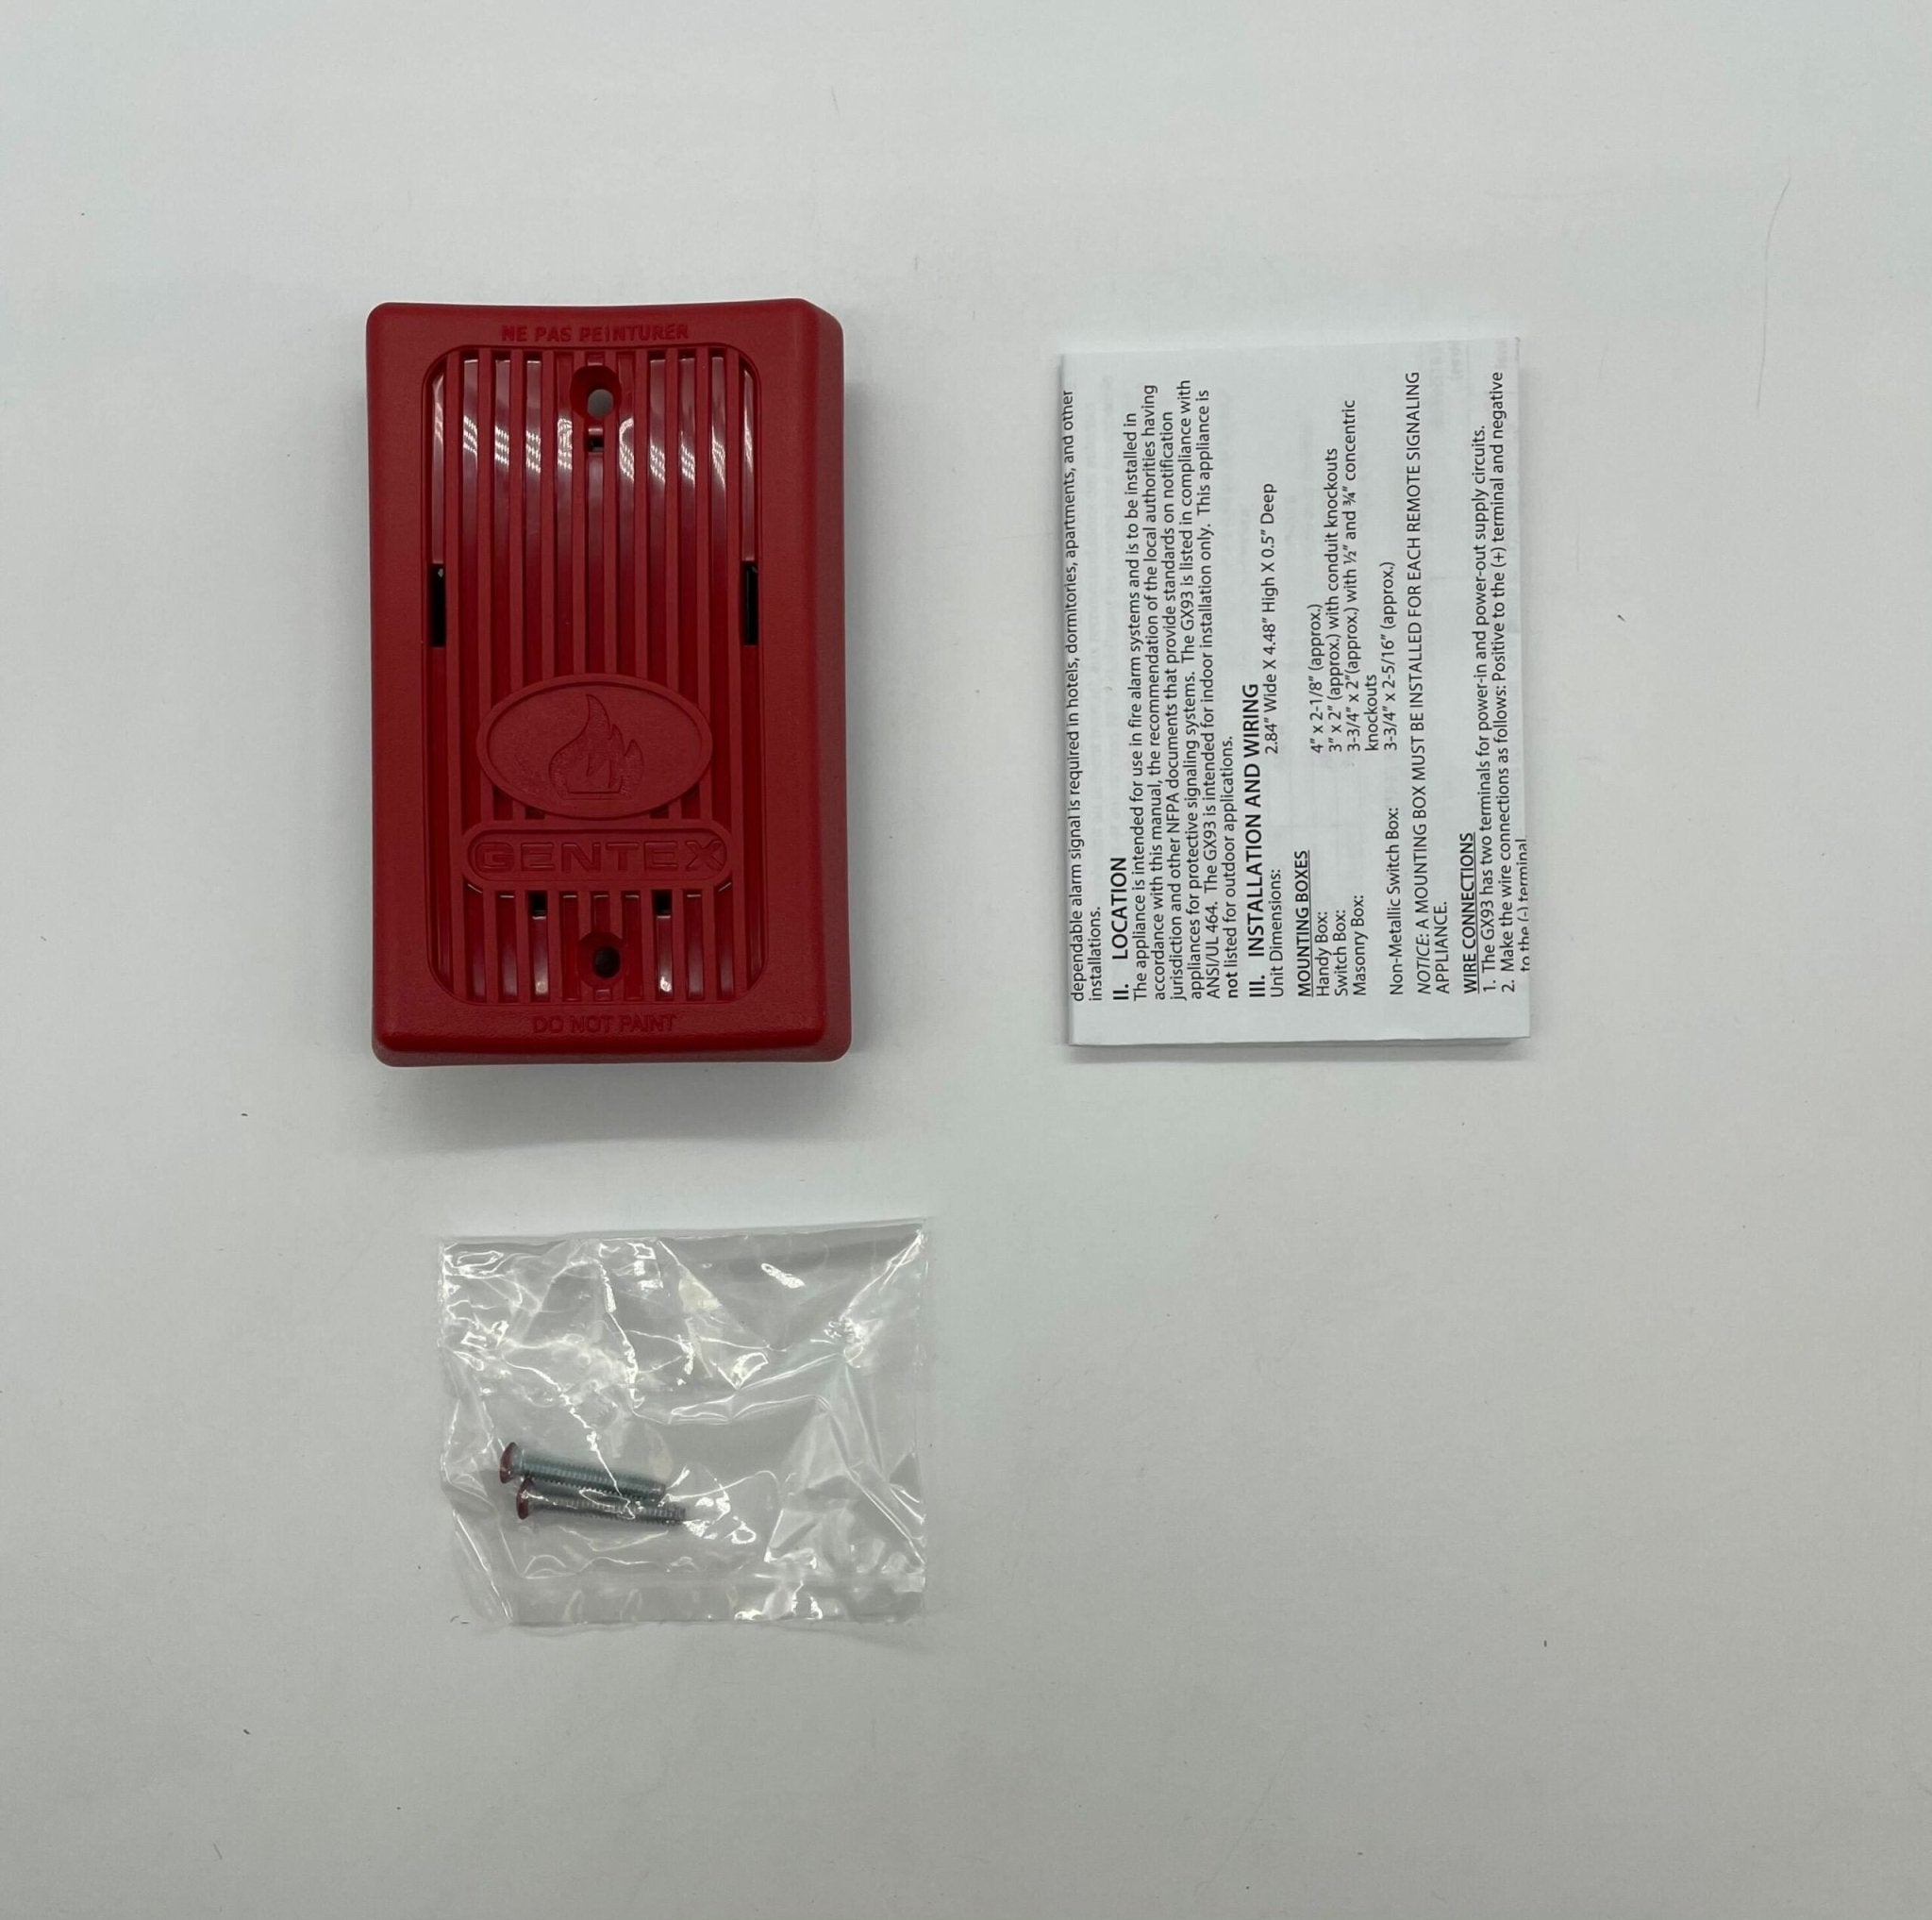 Gentex GX93-R - The Fire Alarm Supplier